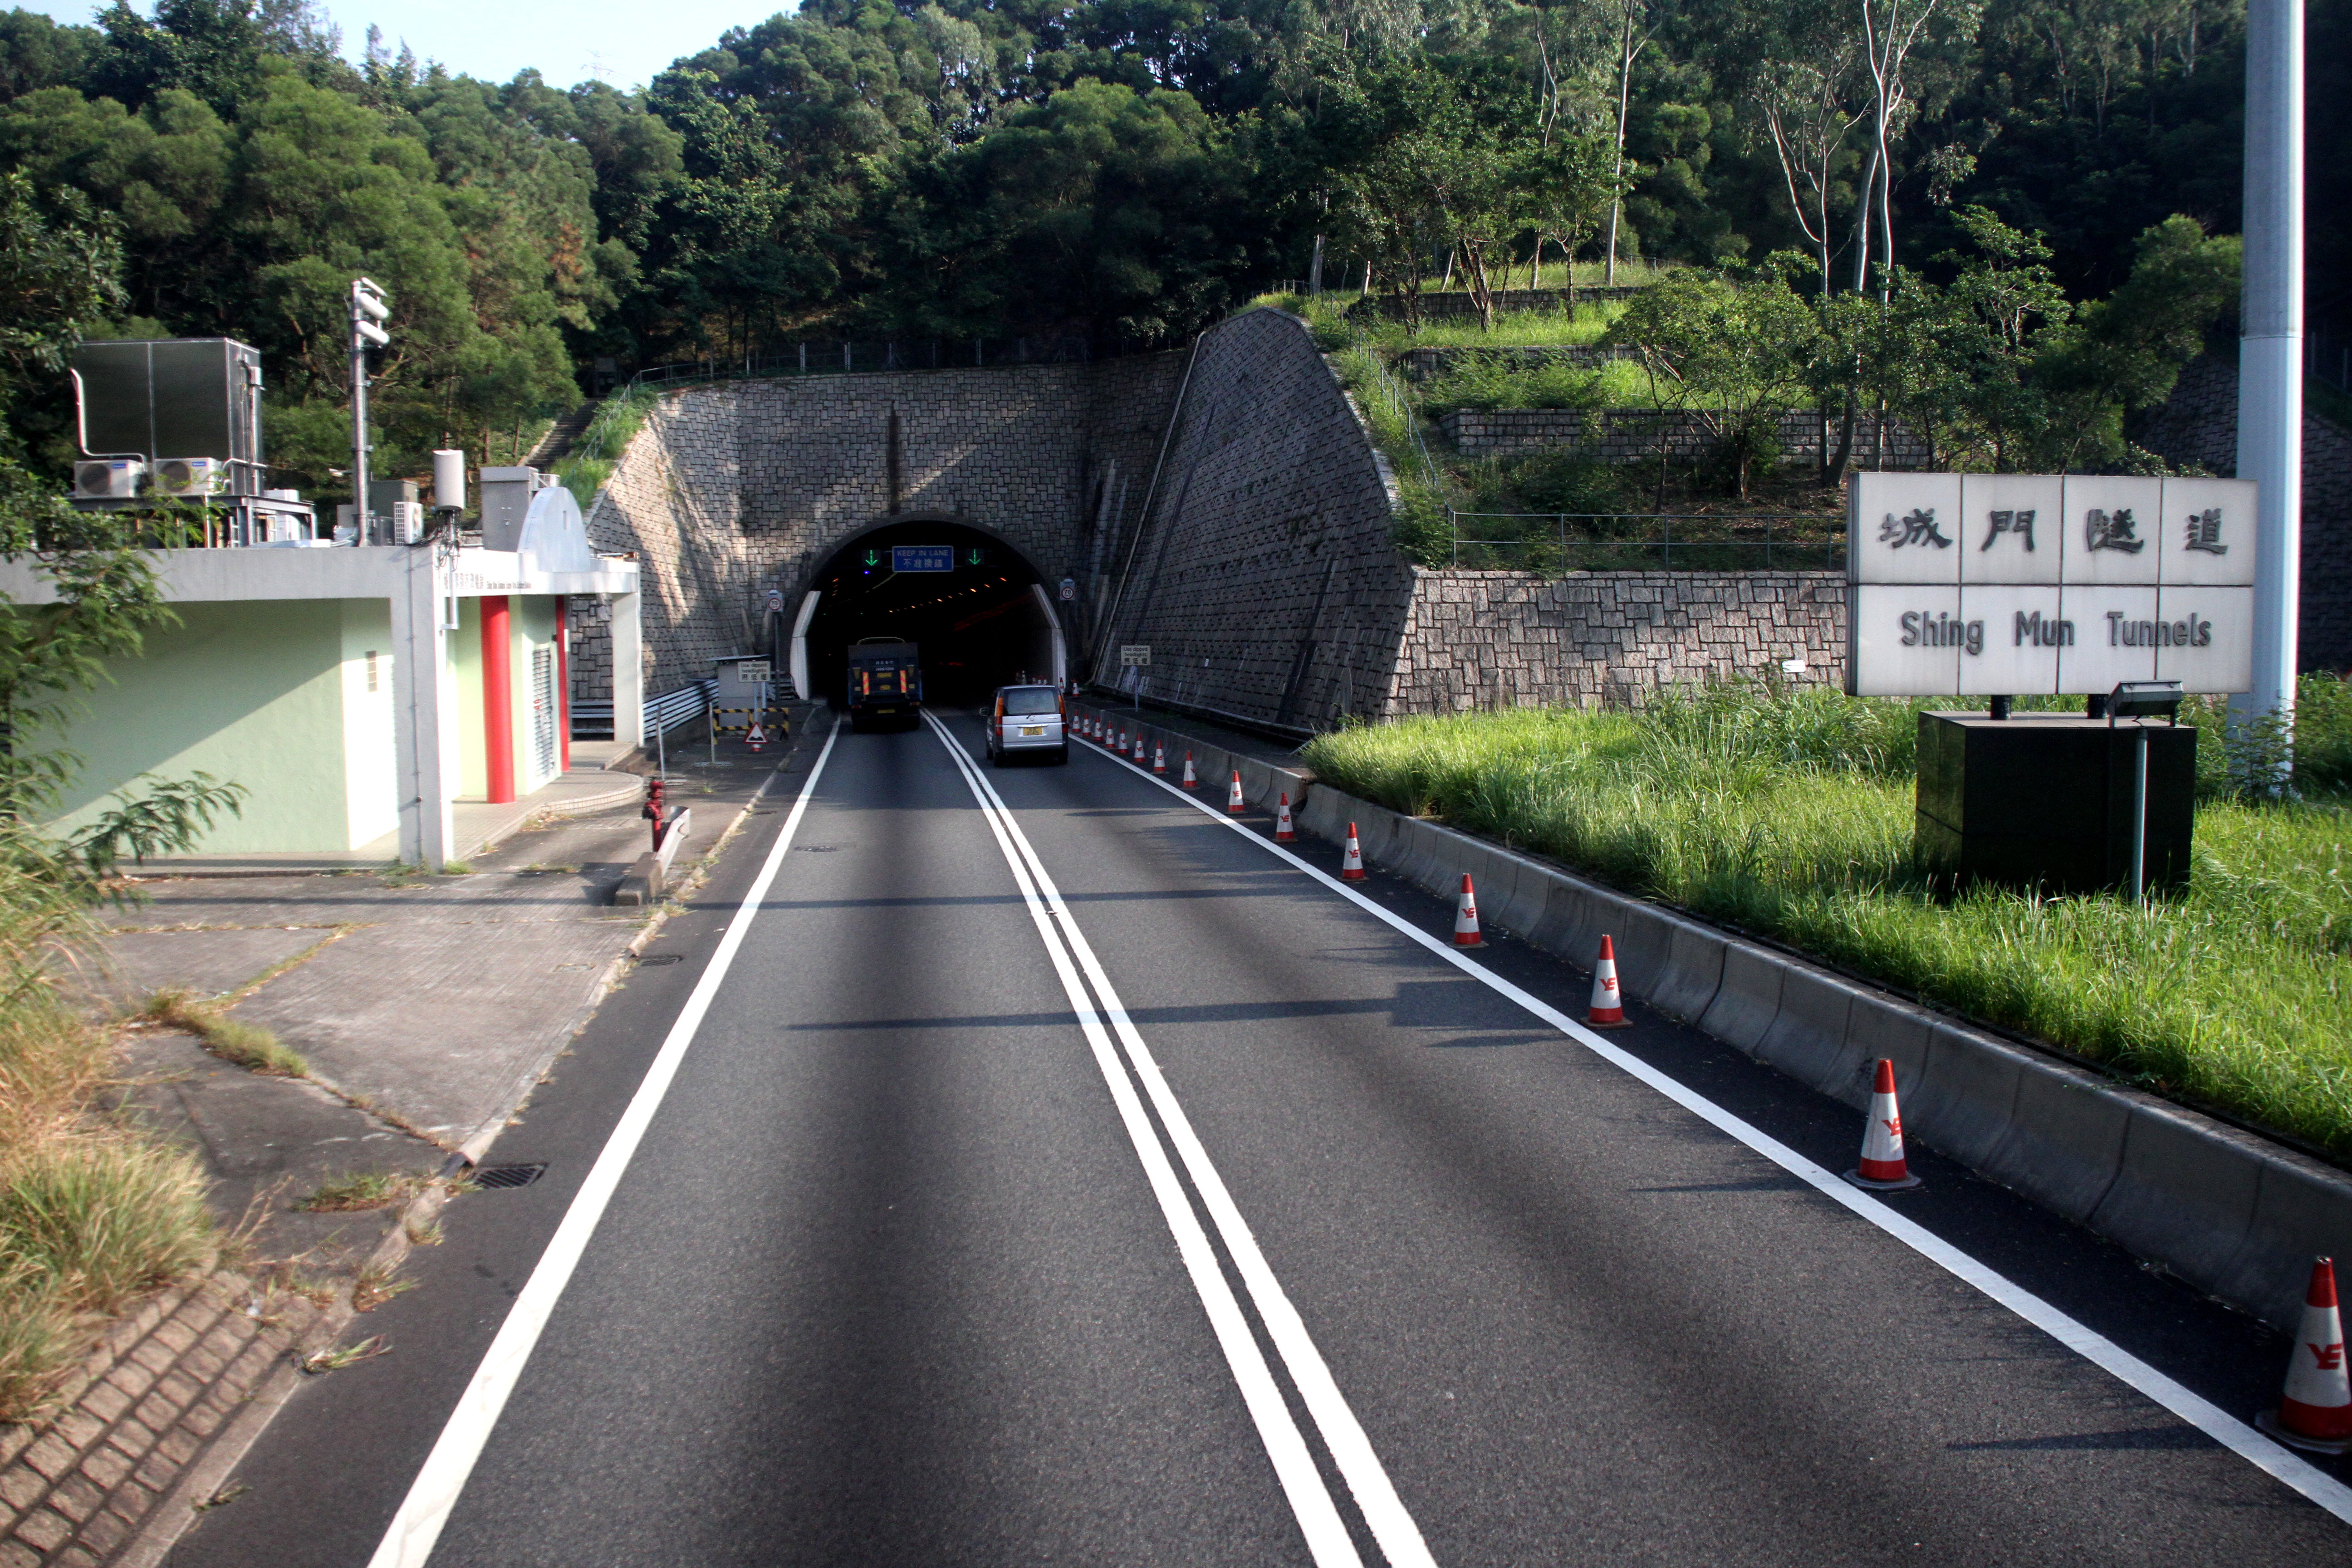 Shing Mun Tunnels and Shing Mun Tunnel Road | Hong Kong Buses Wiki 